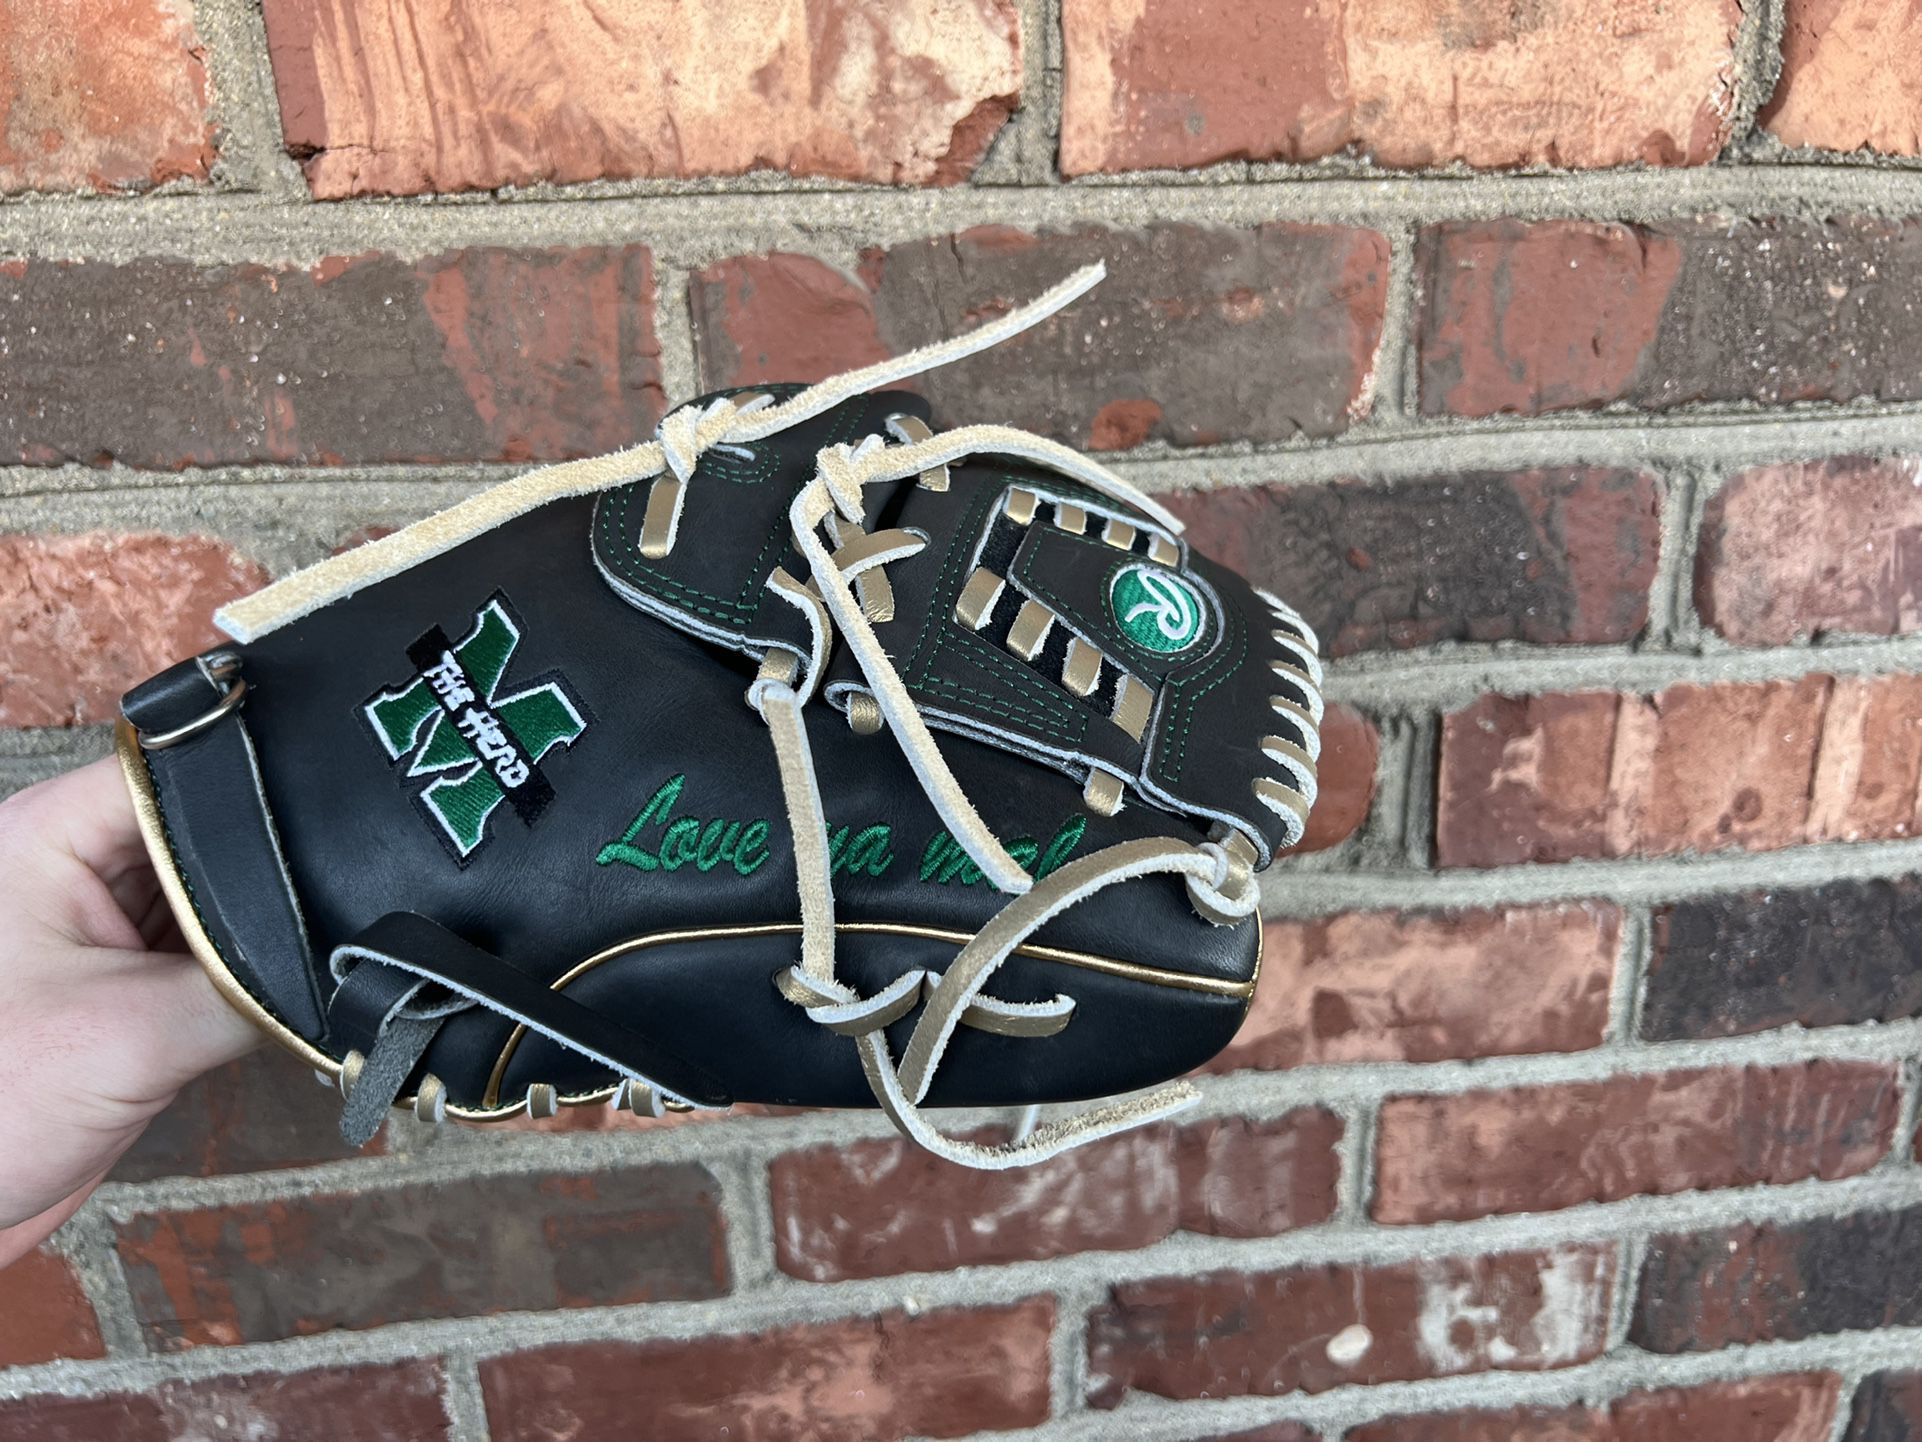 Marshall Baseball Glove